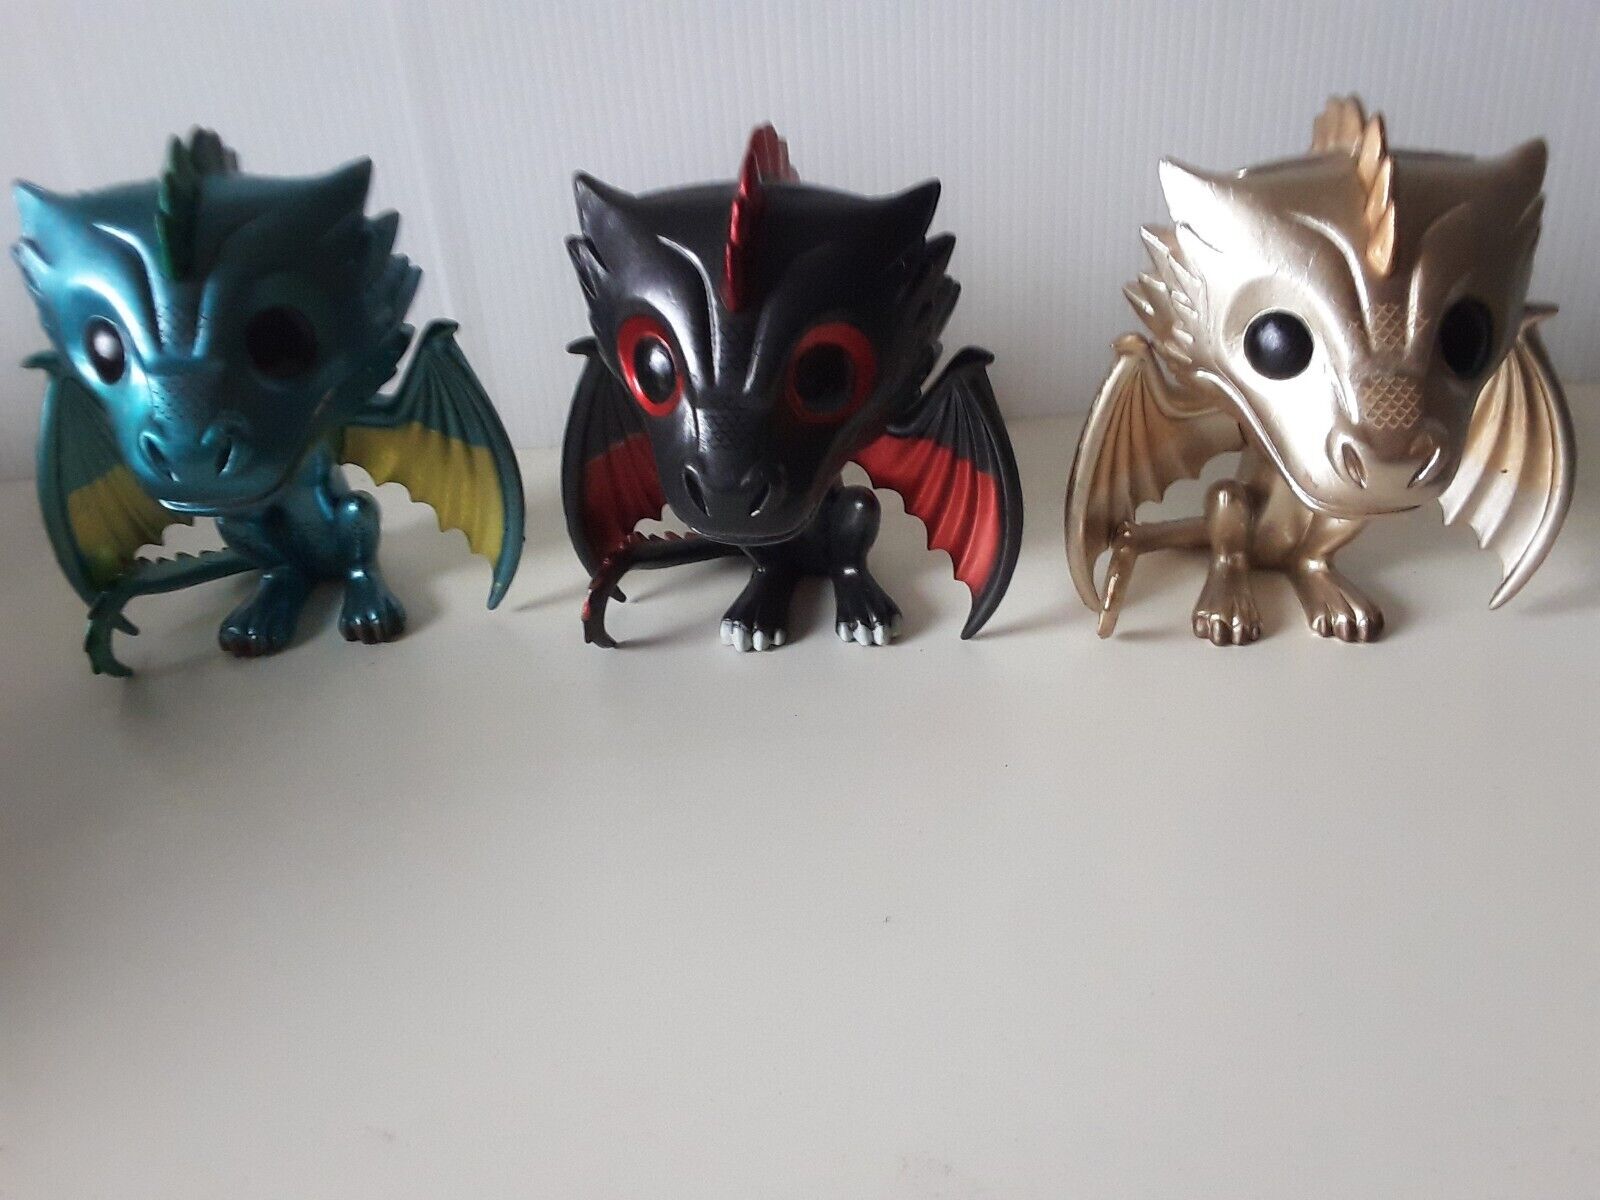 3 x Funko Pop Game of Thrones  Drogon  Rhaegal  & Viserion  Dragon Metallic look